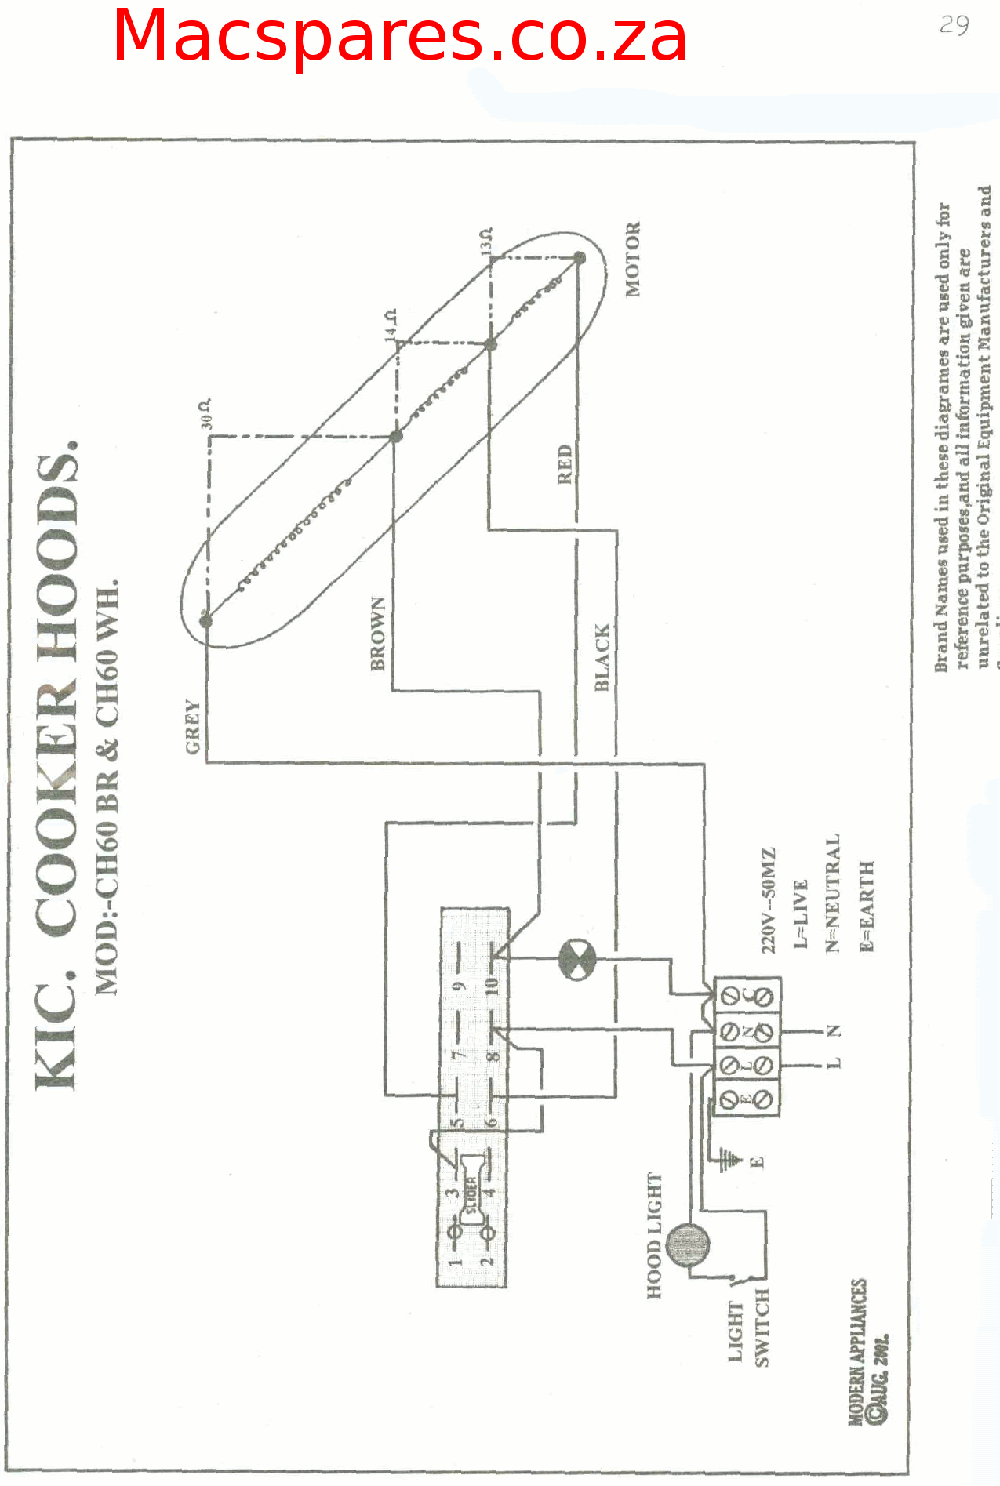 Wiring Electric Cooker Diagram - Wiring Diagram Schemas